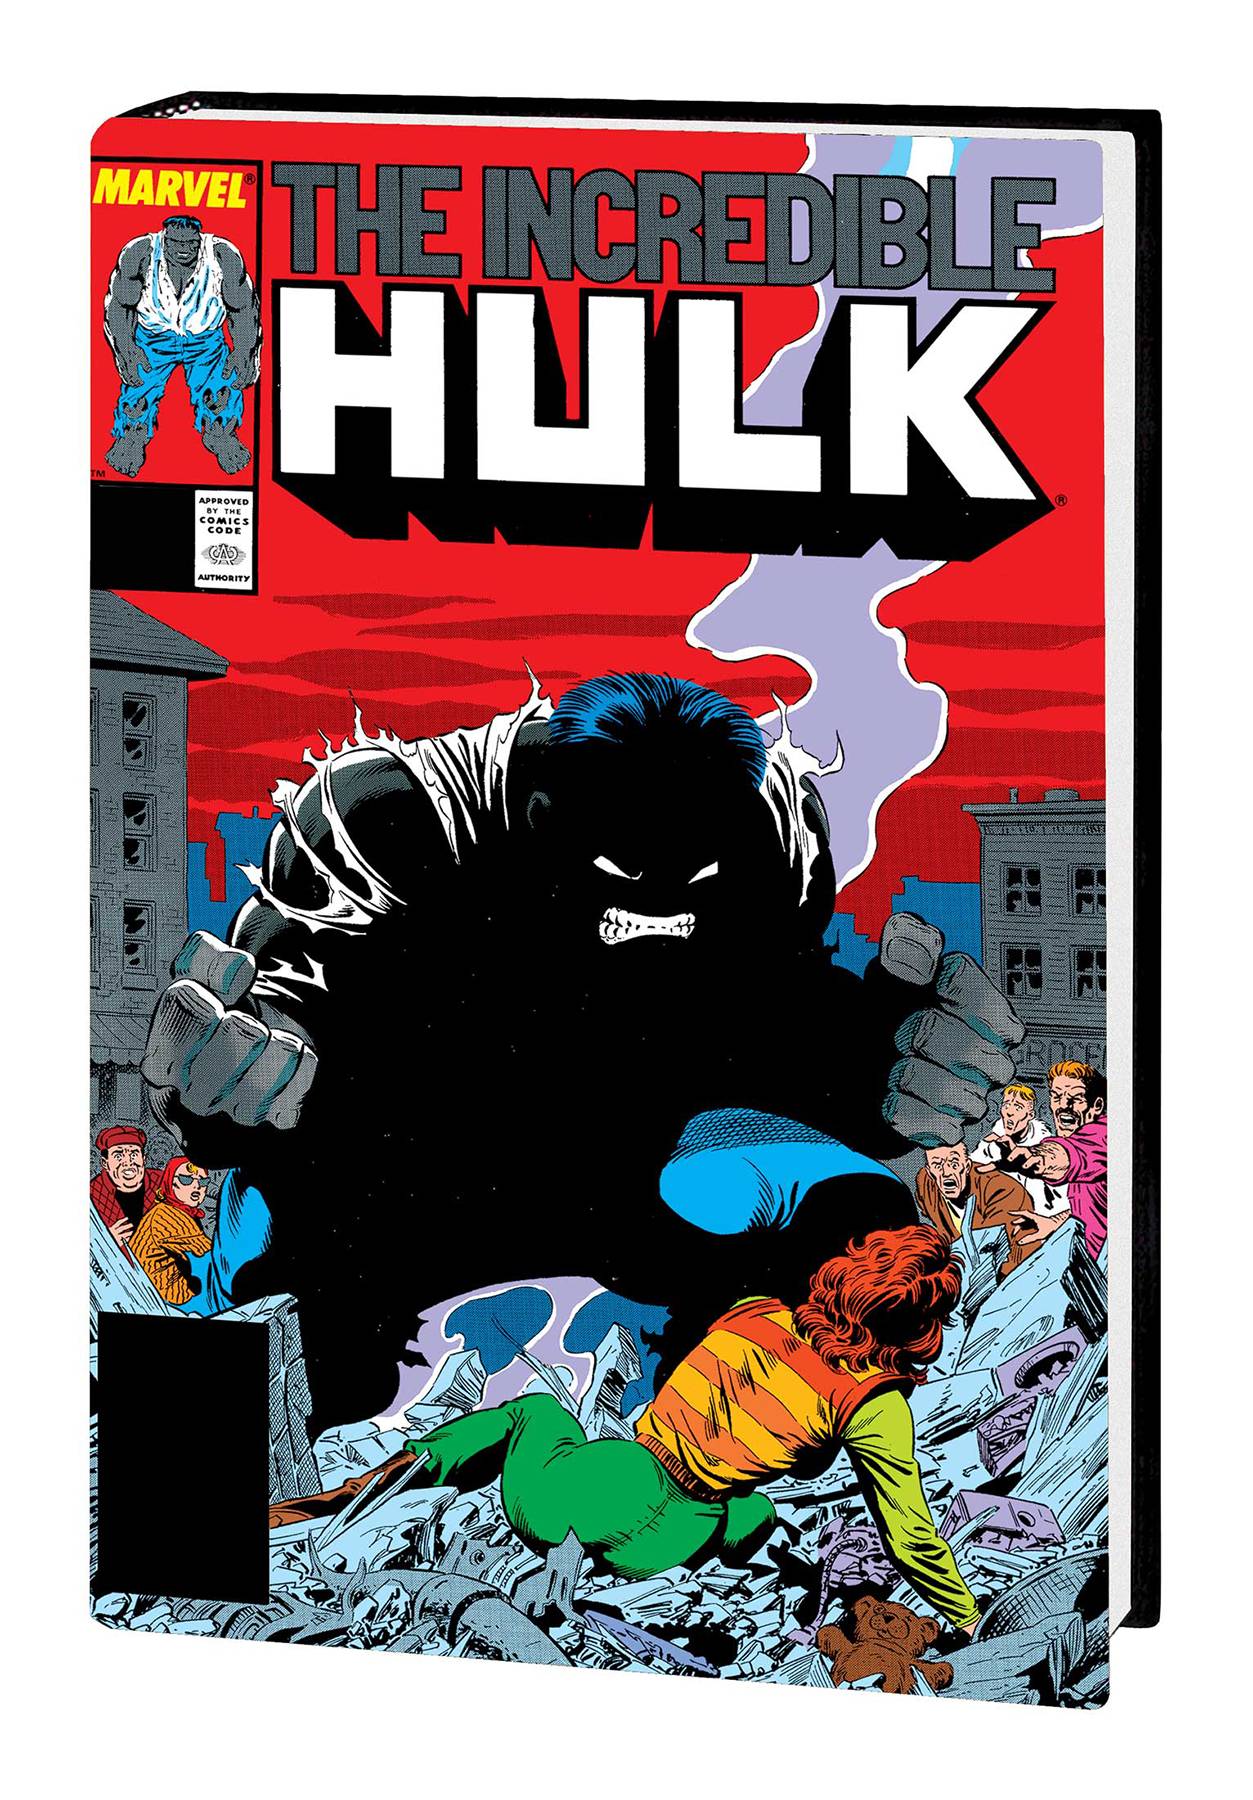 Incredible Hulk by Peter David Omnibus Hardcover Volume 1